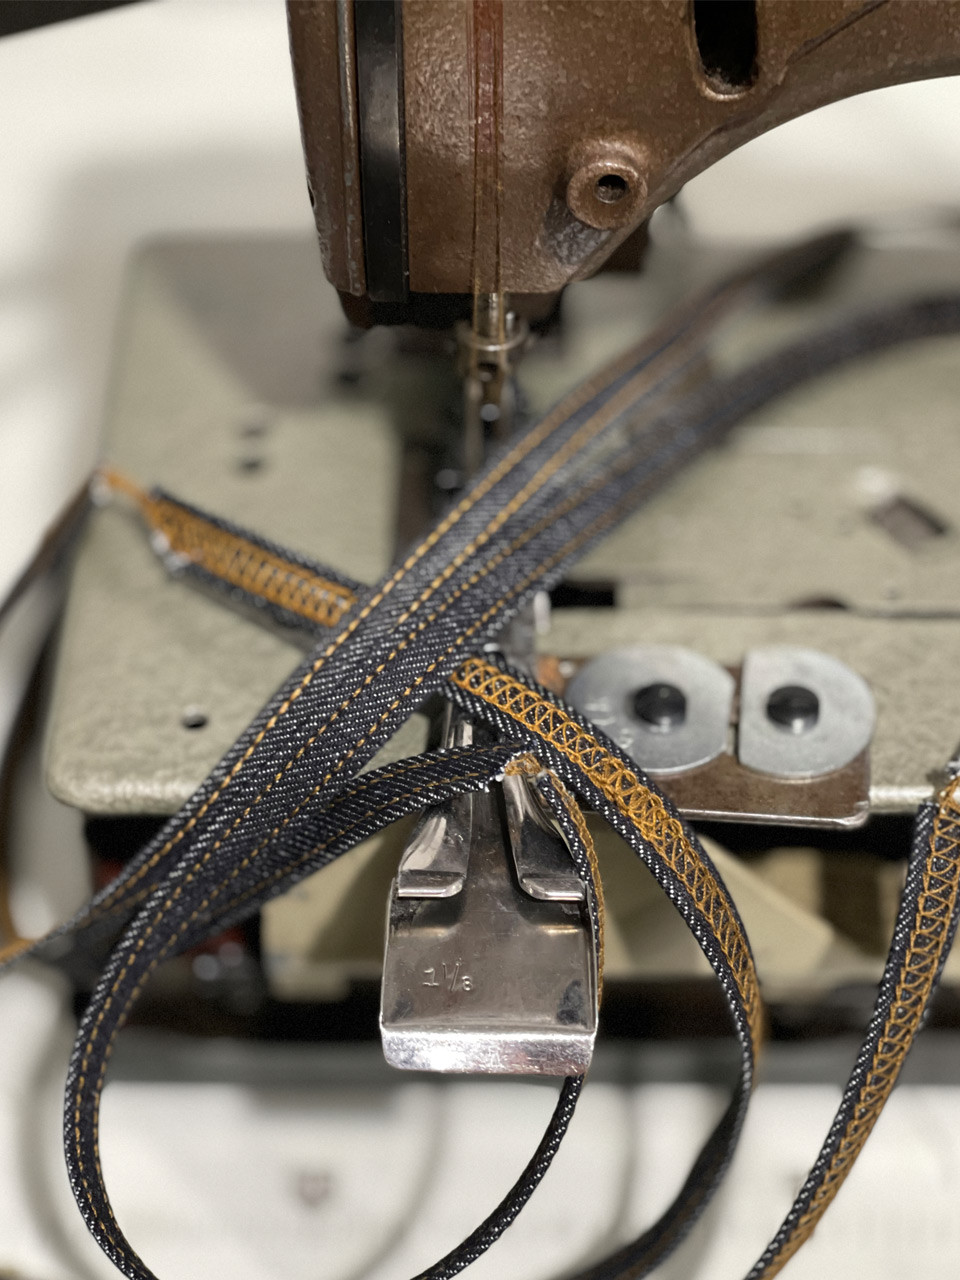 Installing Jean Belt loops, Hemming Jeans & Sewing Buttonhole